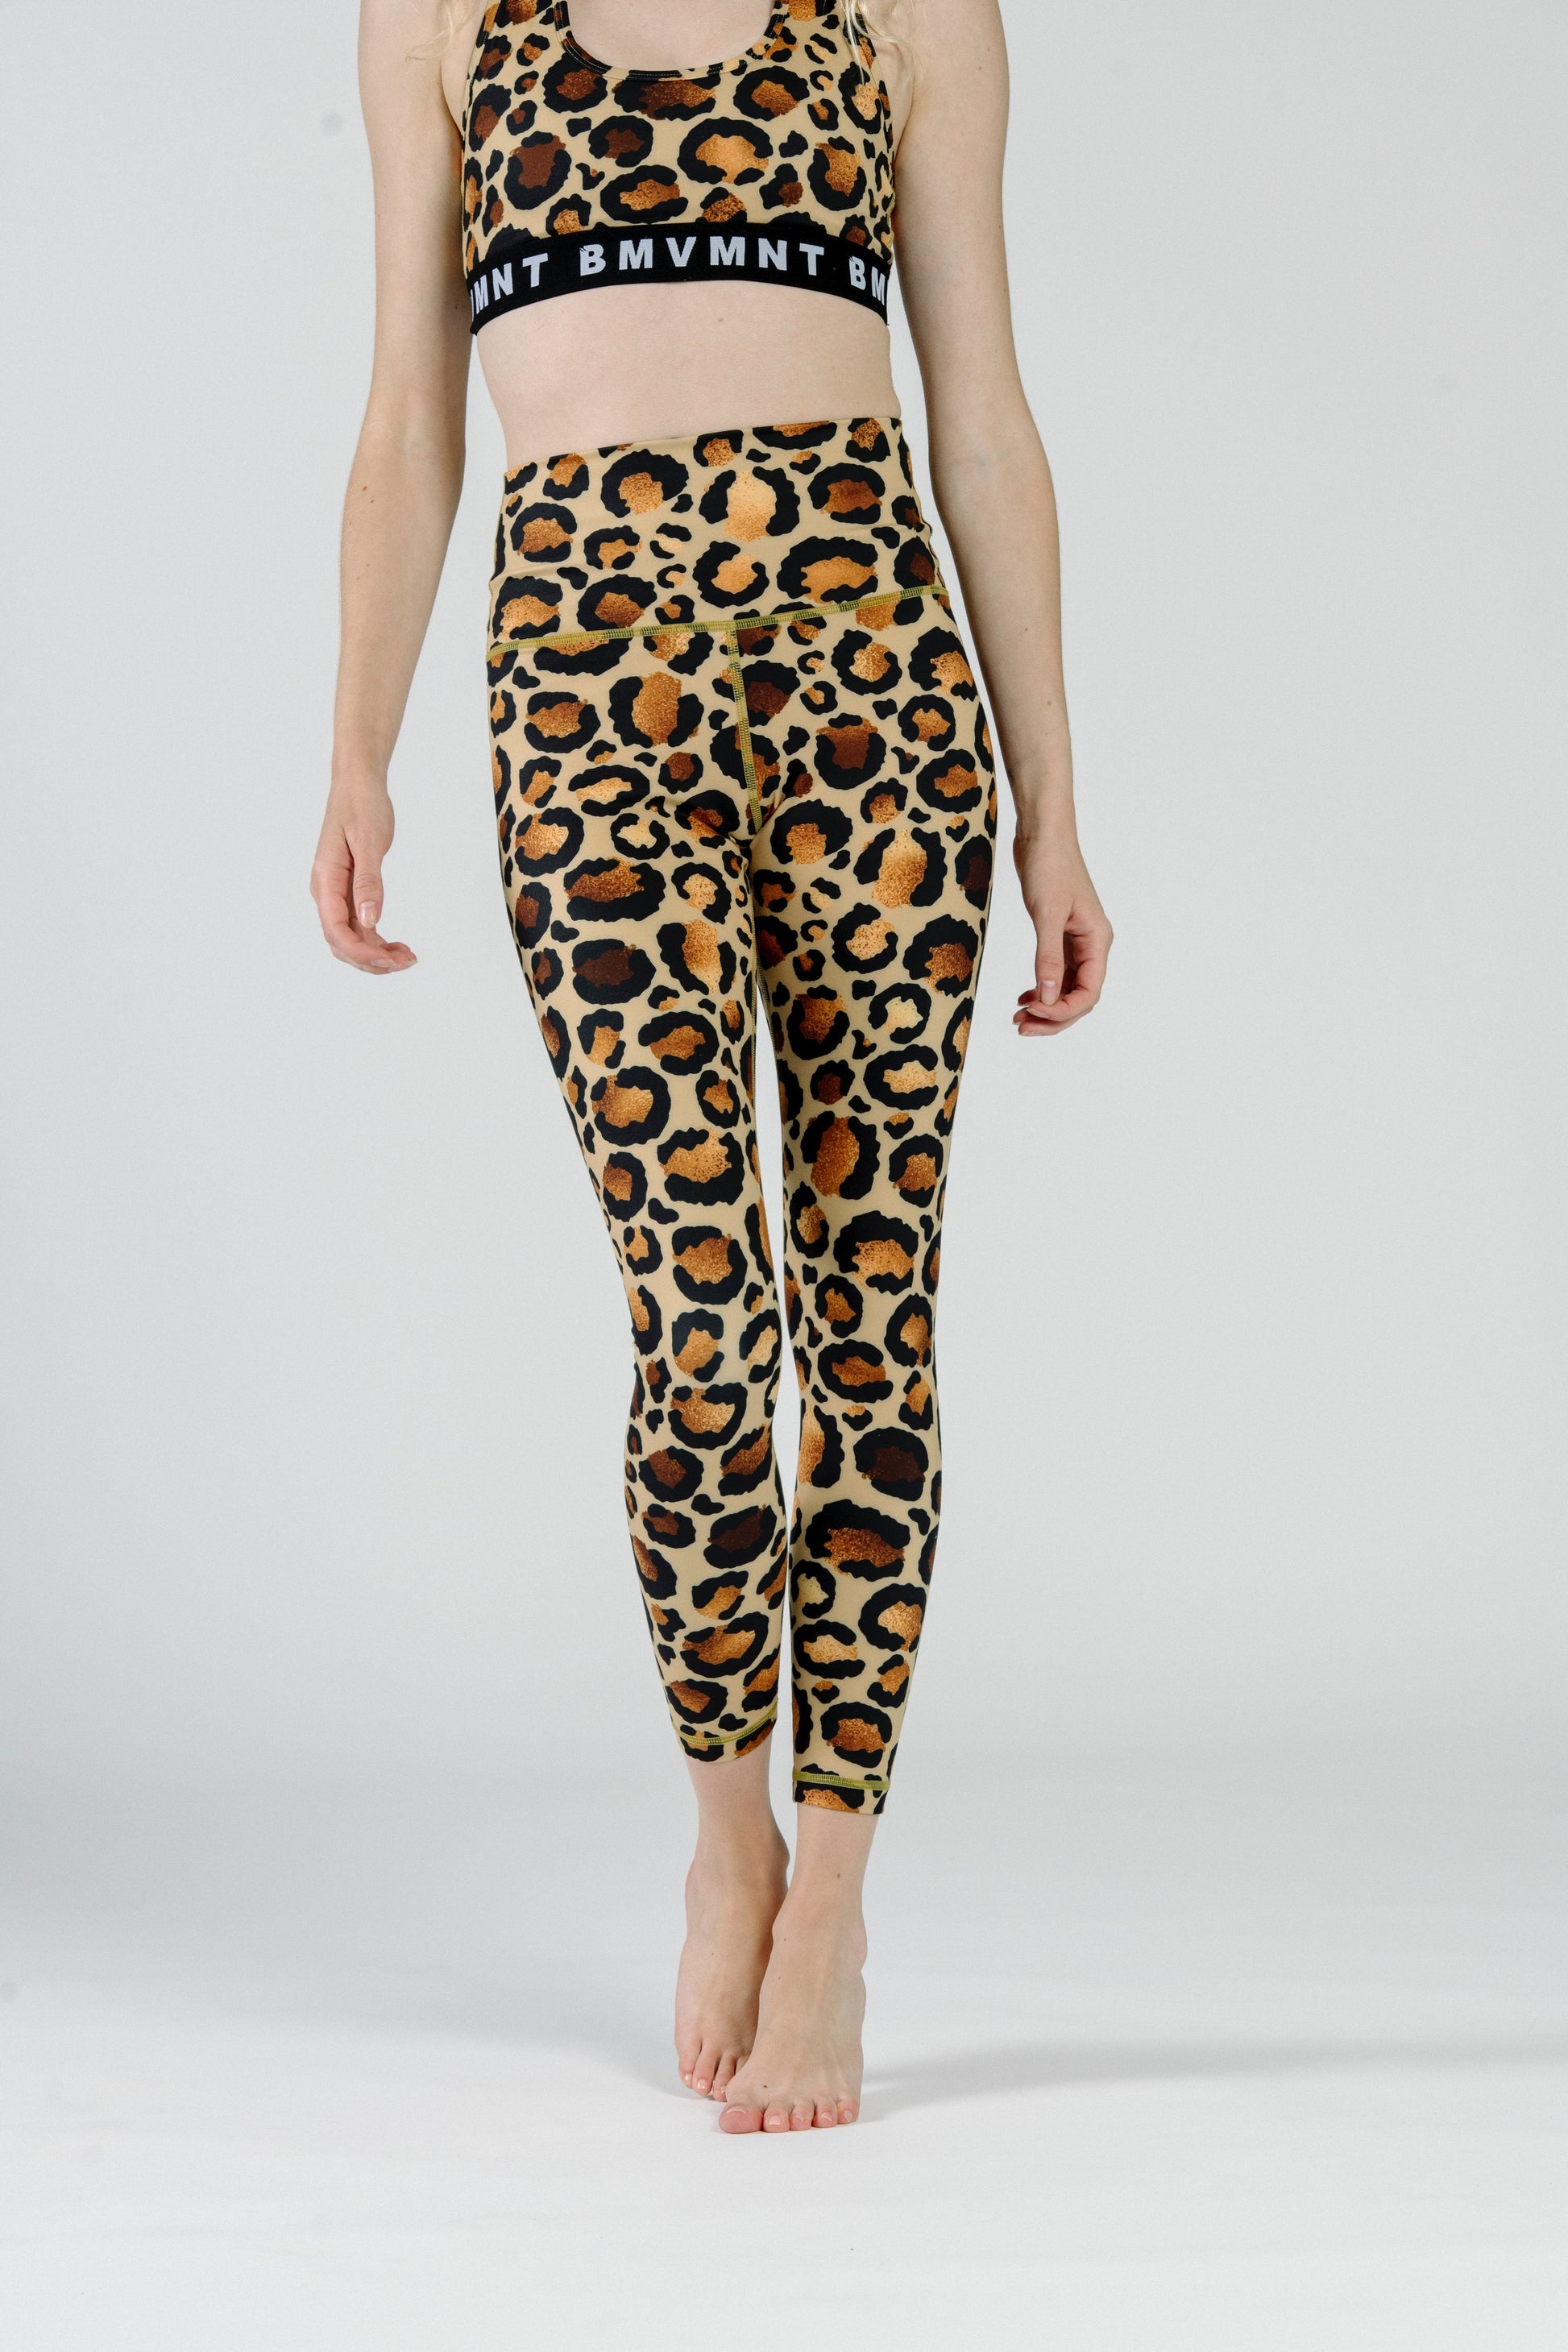 SmoothTech Leggings - Gold + Tan Leopard – Buti MVMNT